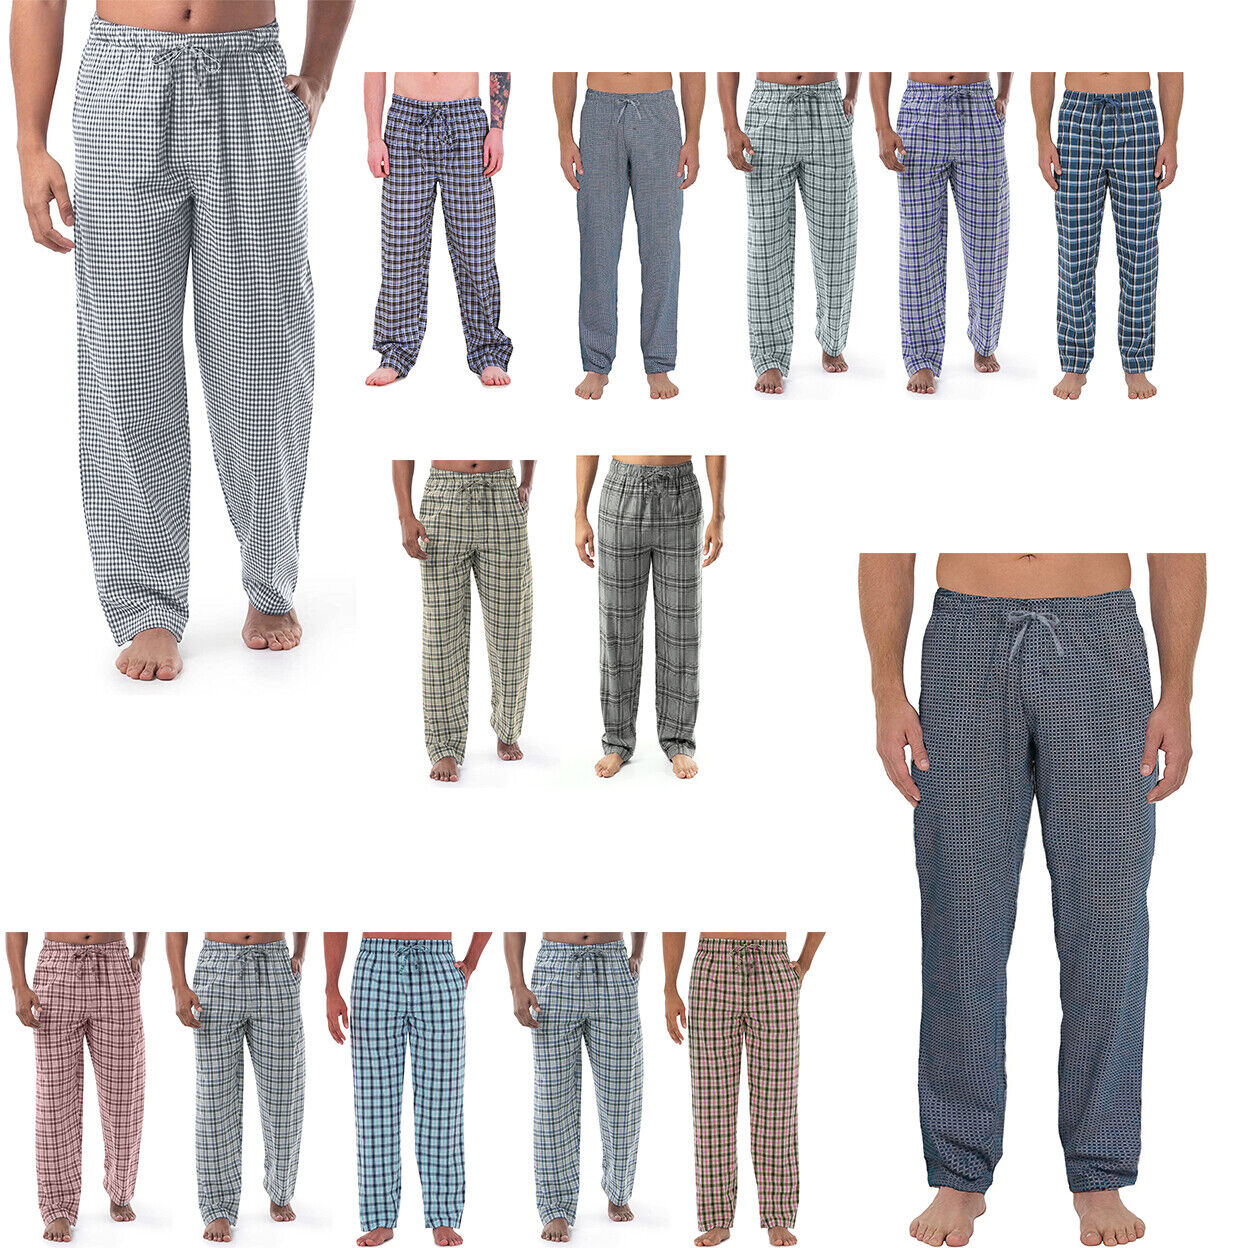 2-Pack: Men's Ultra-Soft Solid & Plaid Cotton Jersey Knit Comfy Sleep Lounge Pajama Pants - Plaid, Large